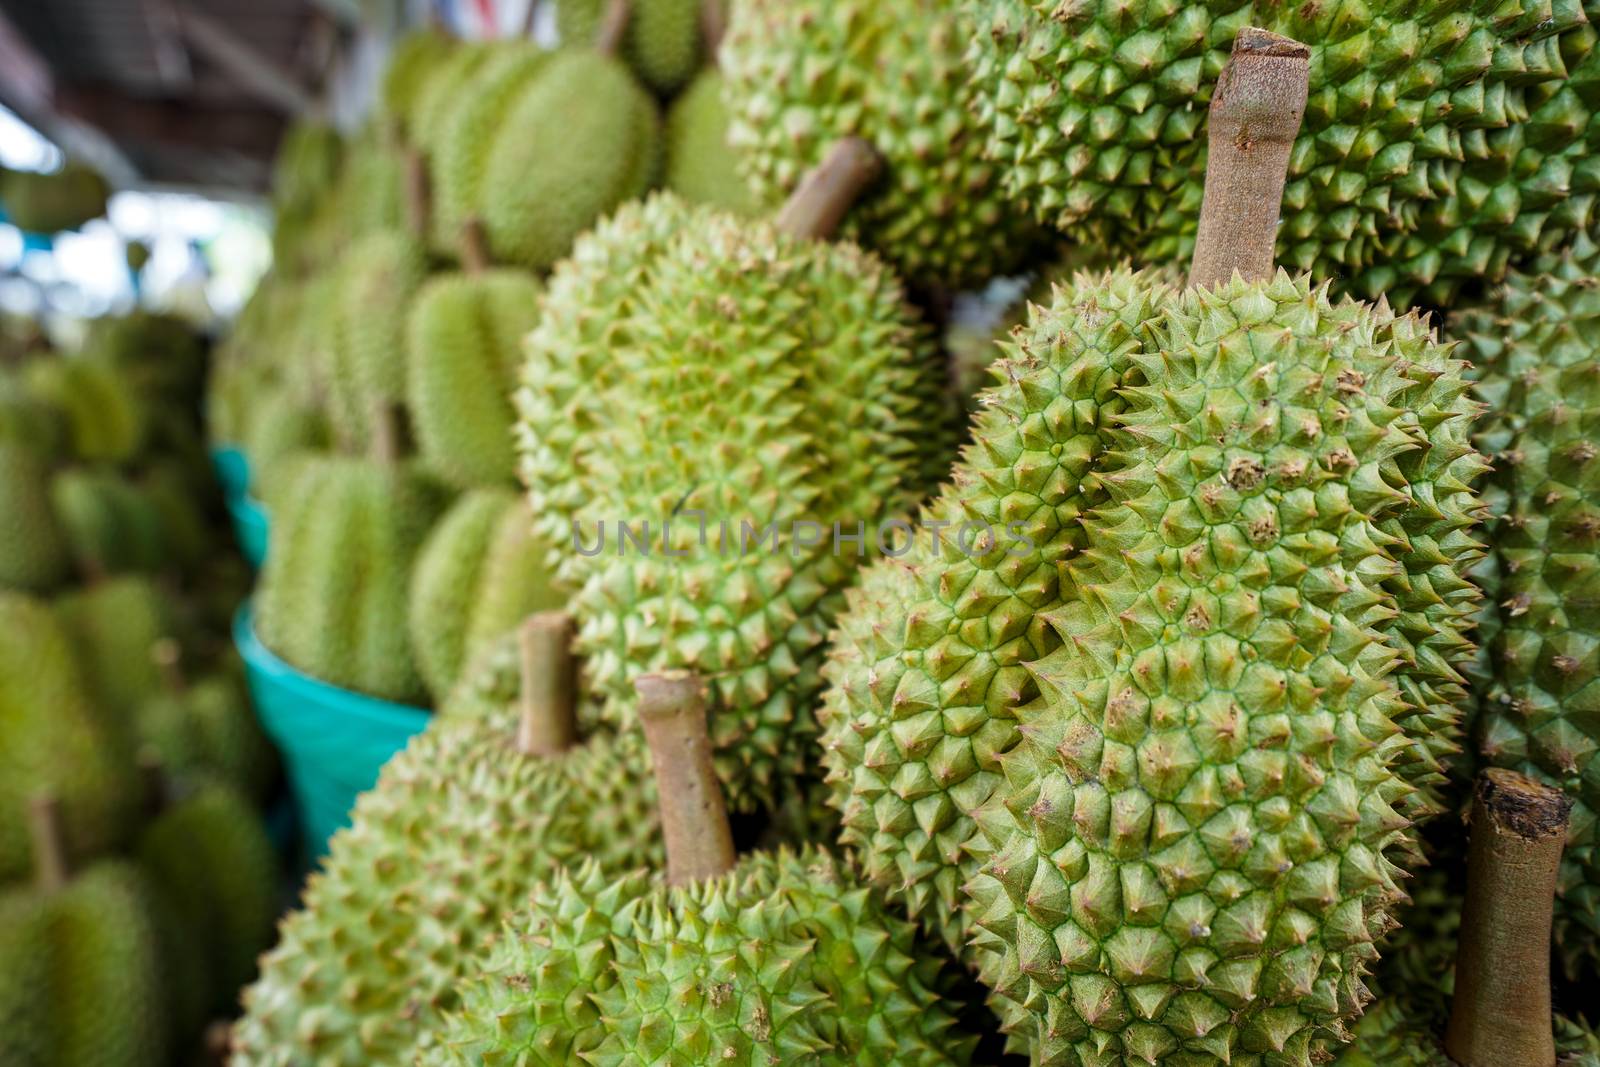 Durian on the basket is shelf in thai fruit market